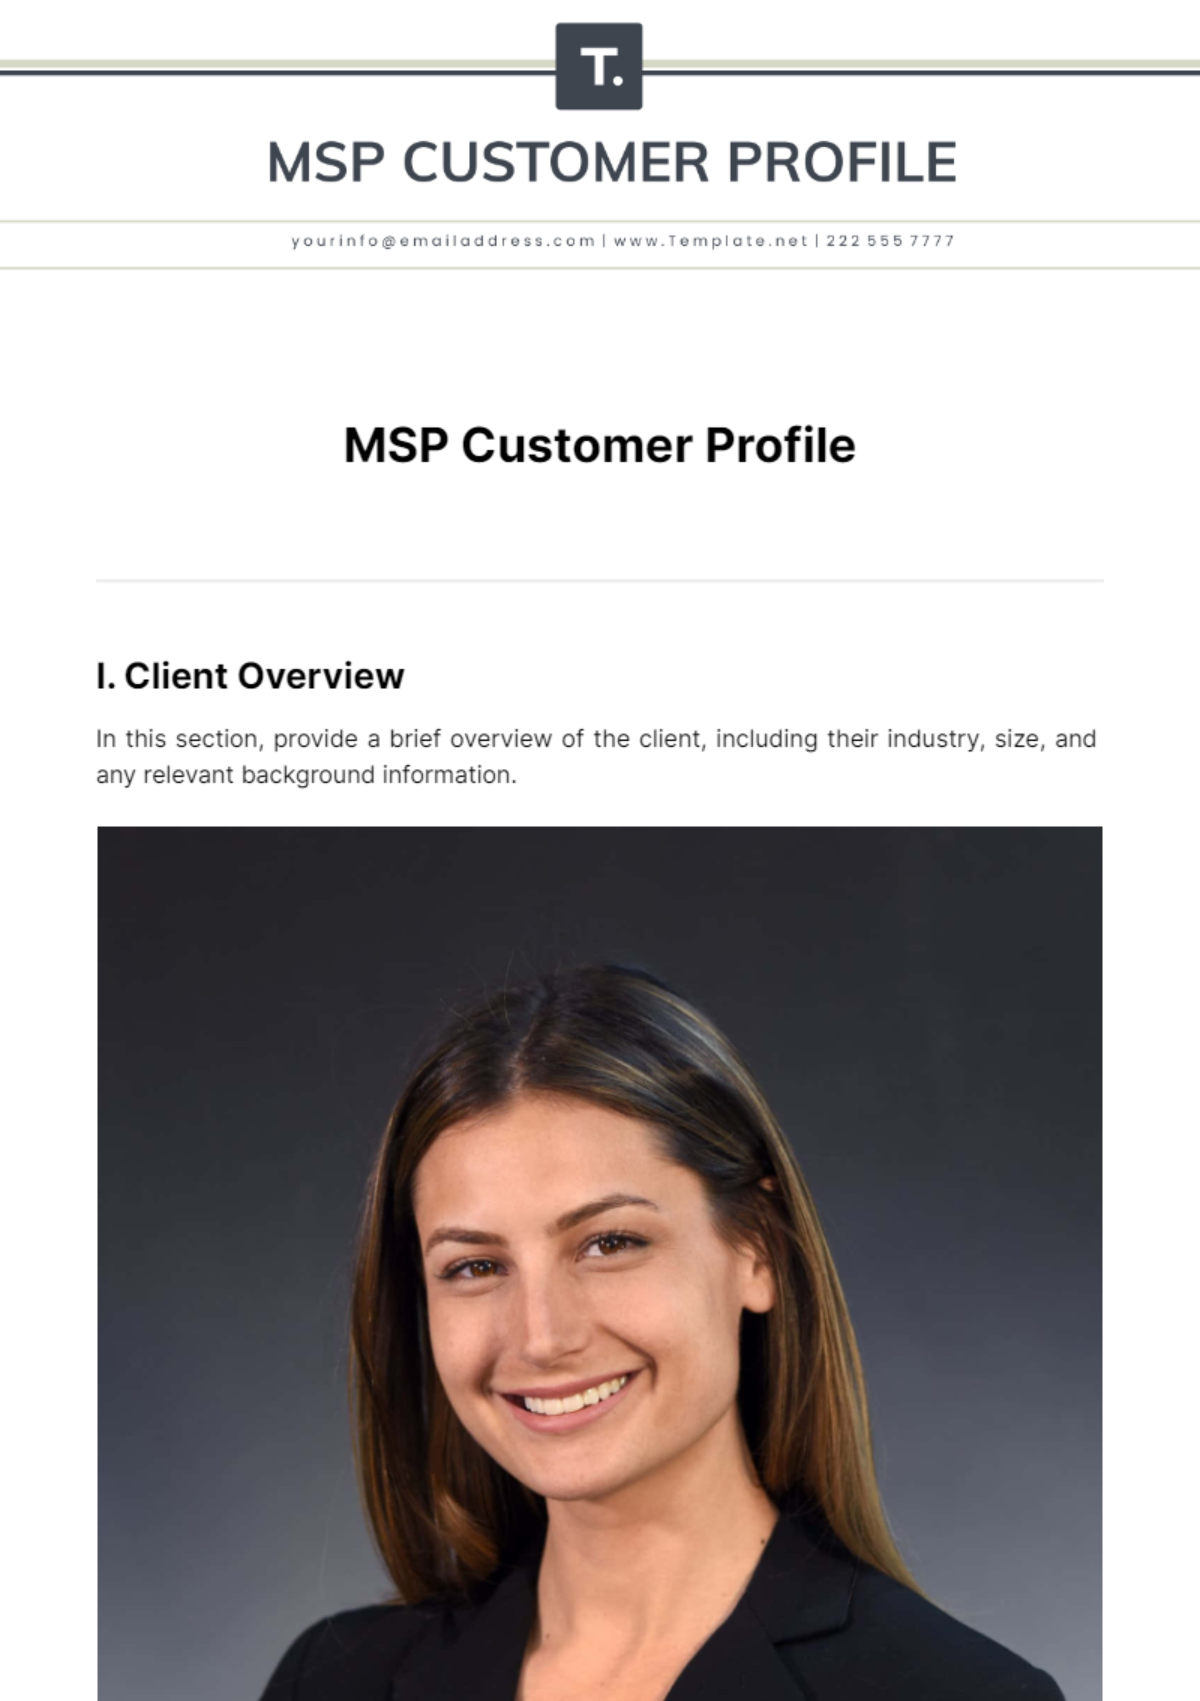 MSP Customer Profile Template